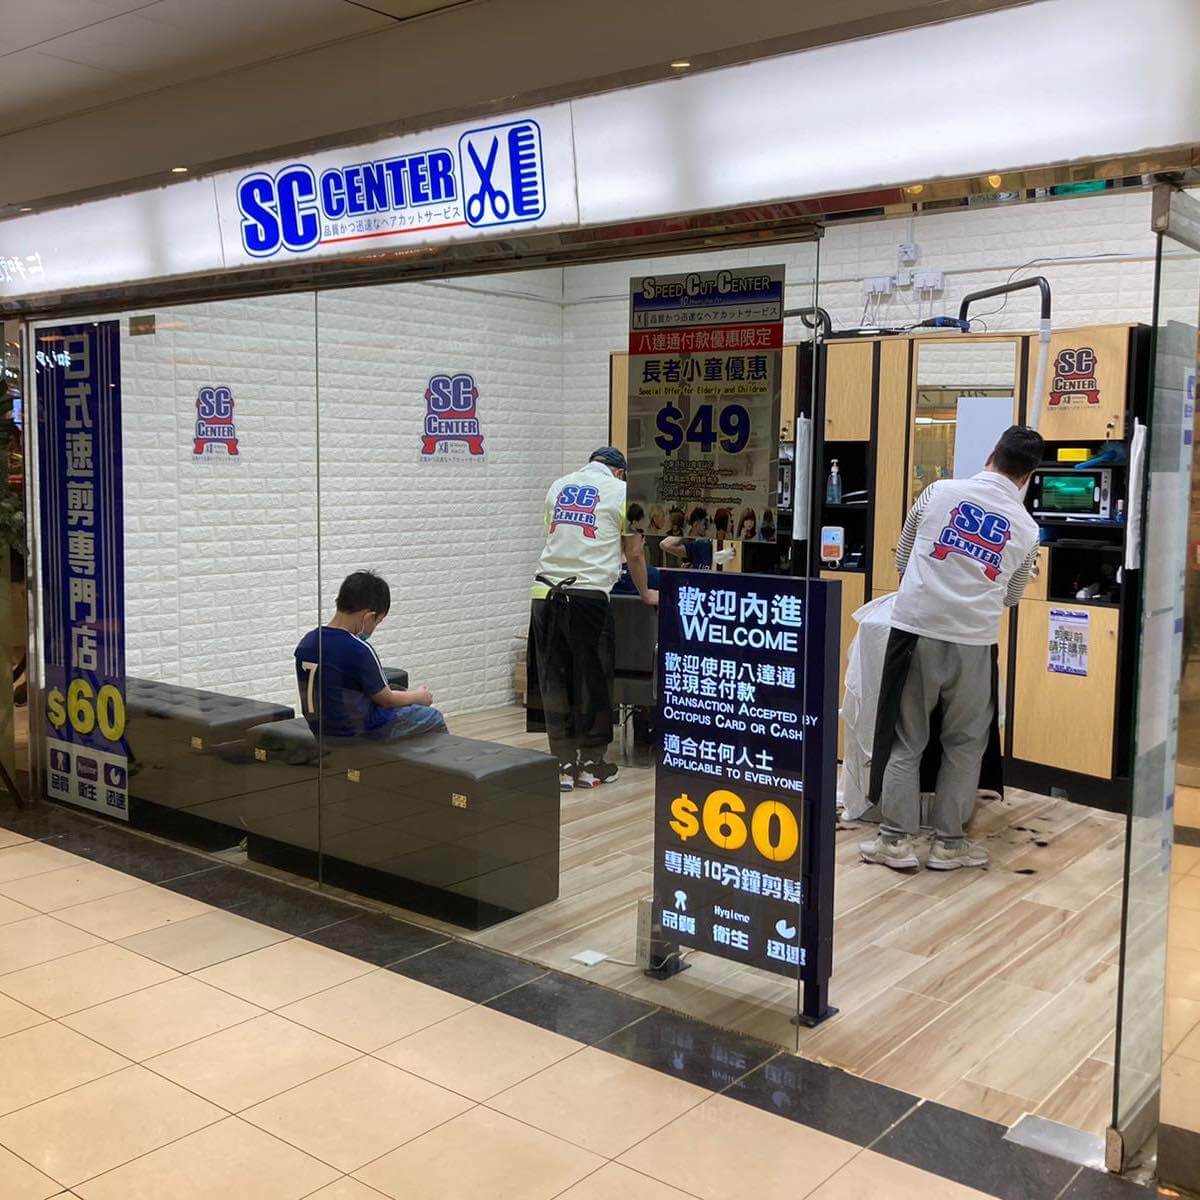 SC Center的特許經營香港區加盟店項目4